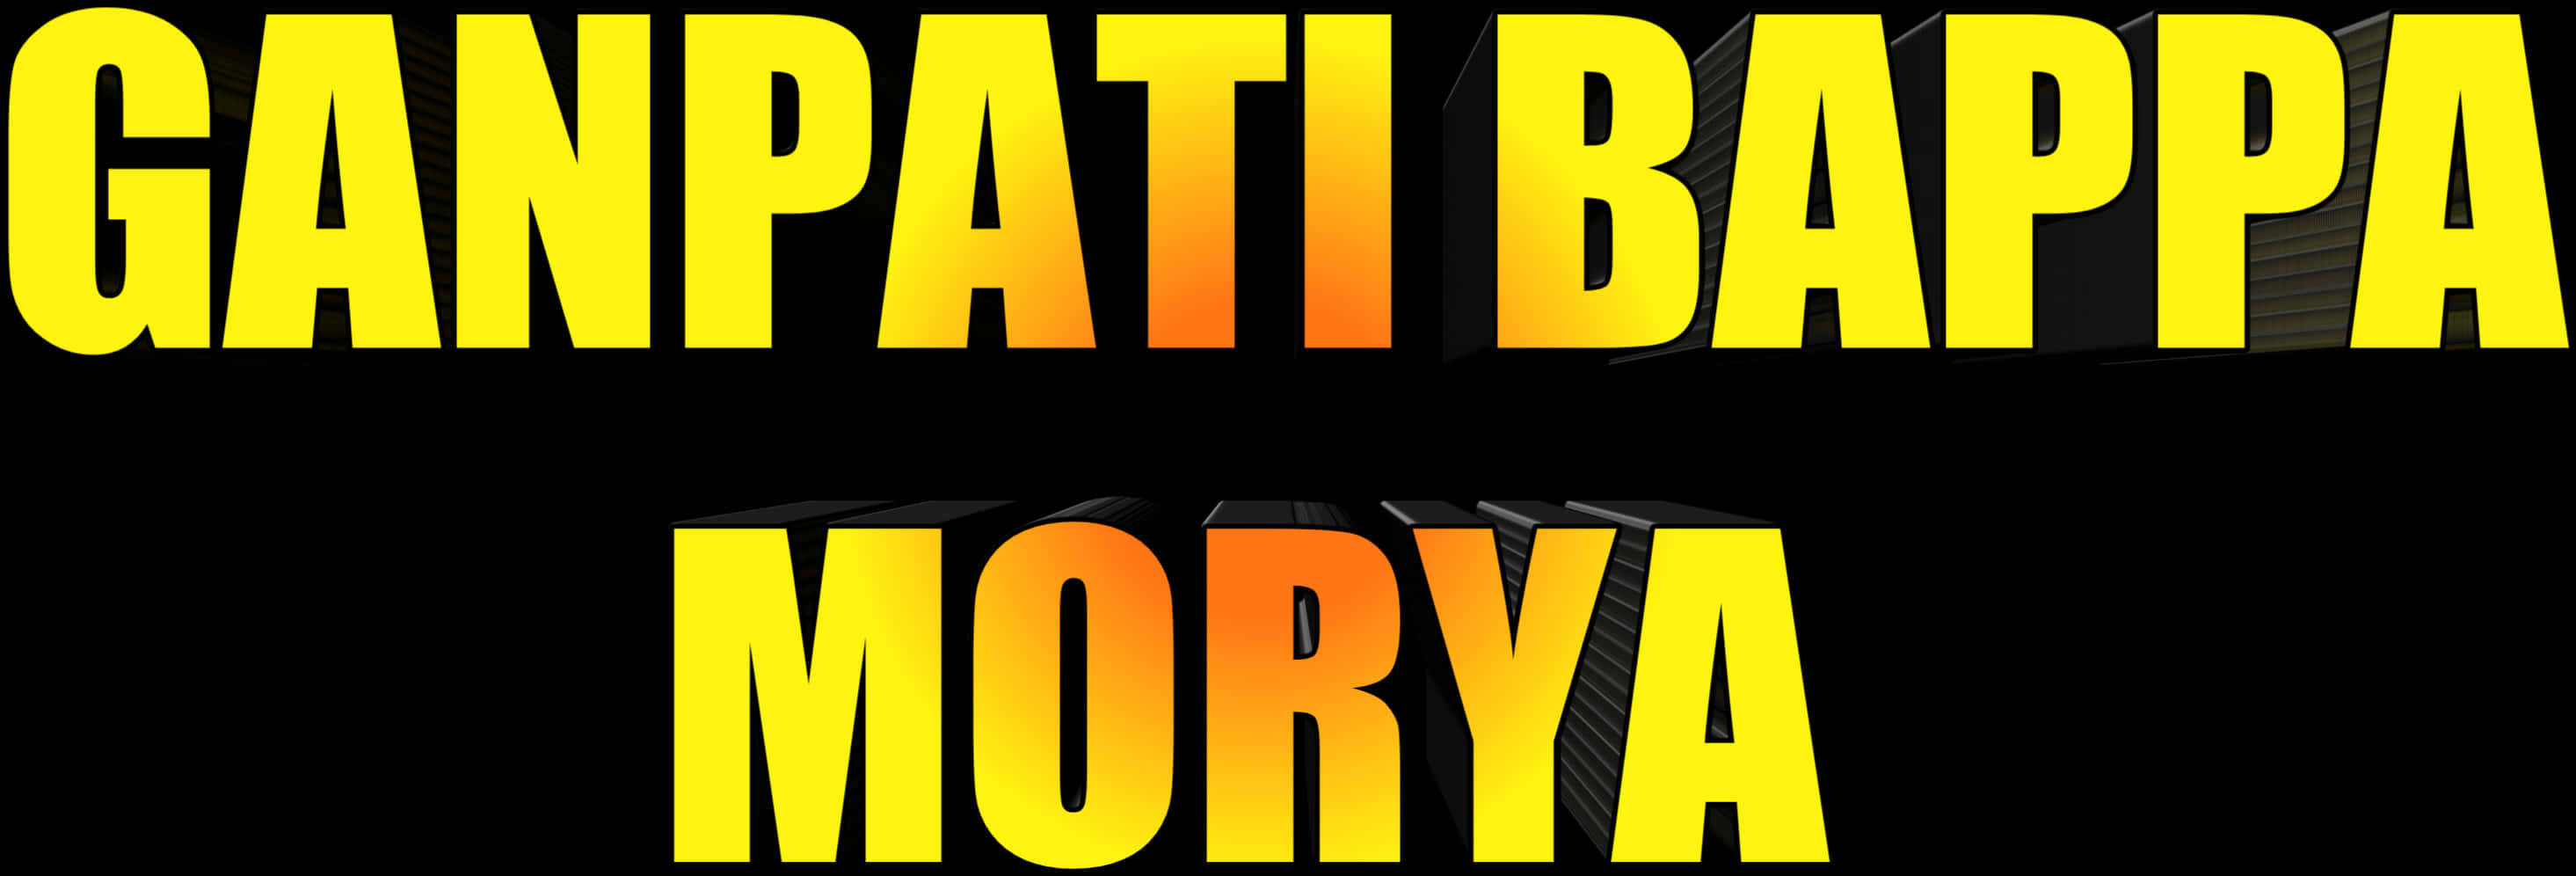 Ganpati Bappa Morya Text Banner PNG